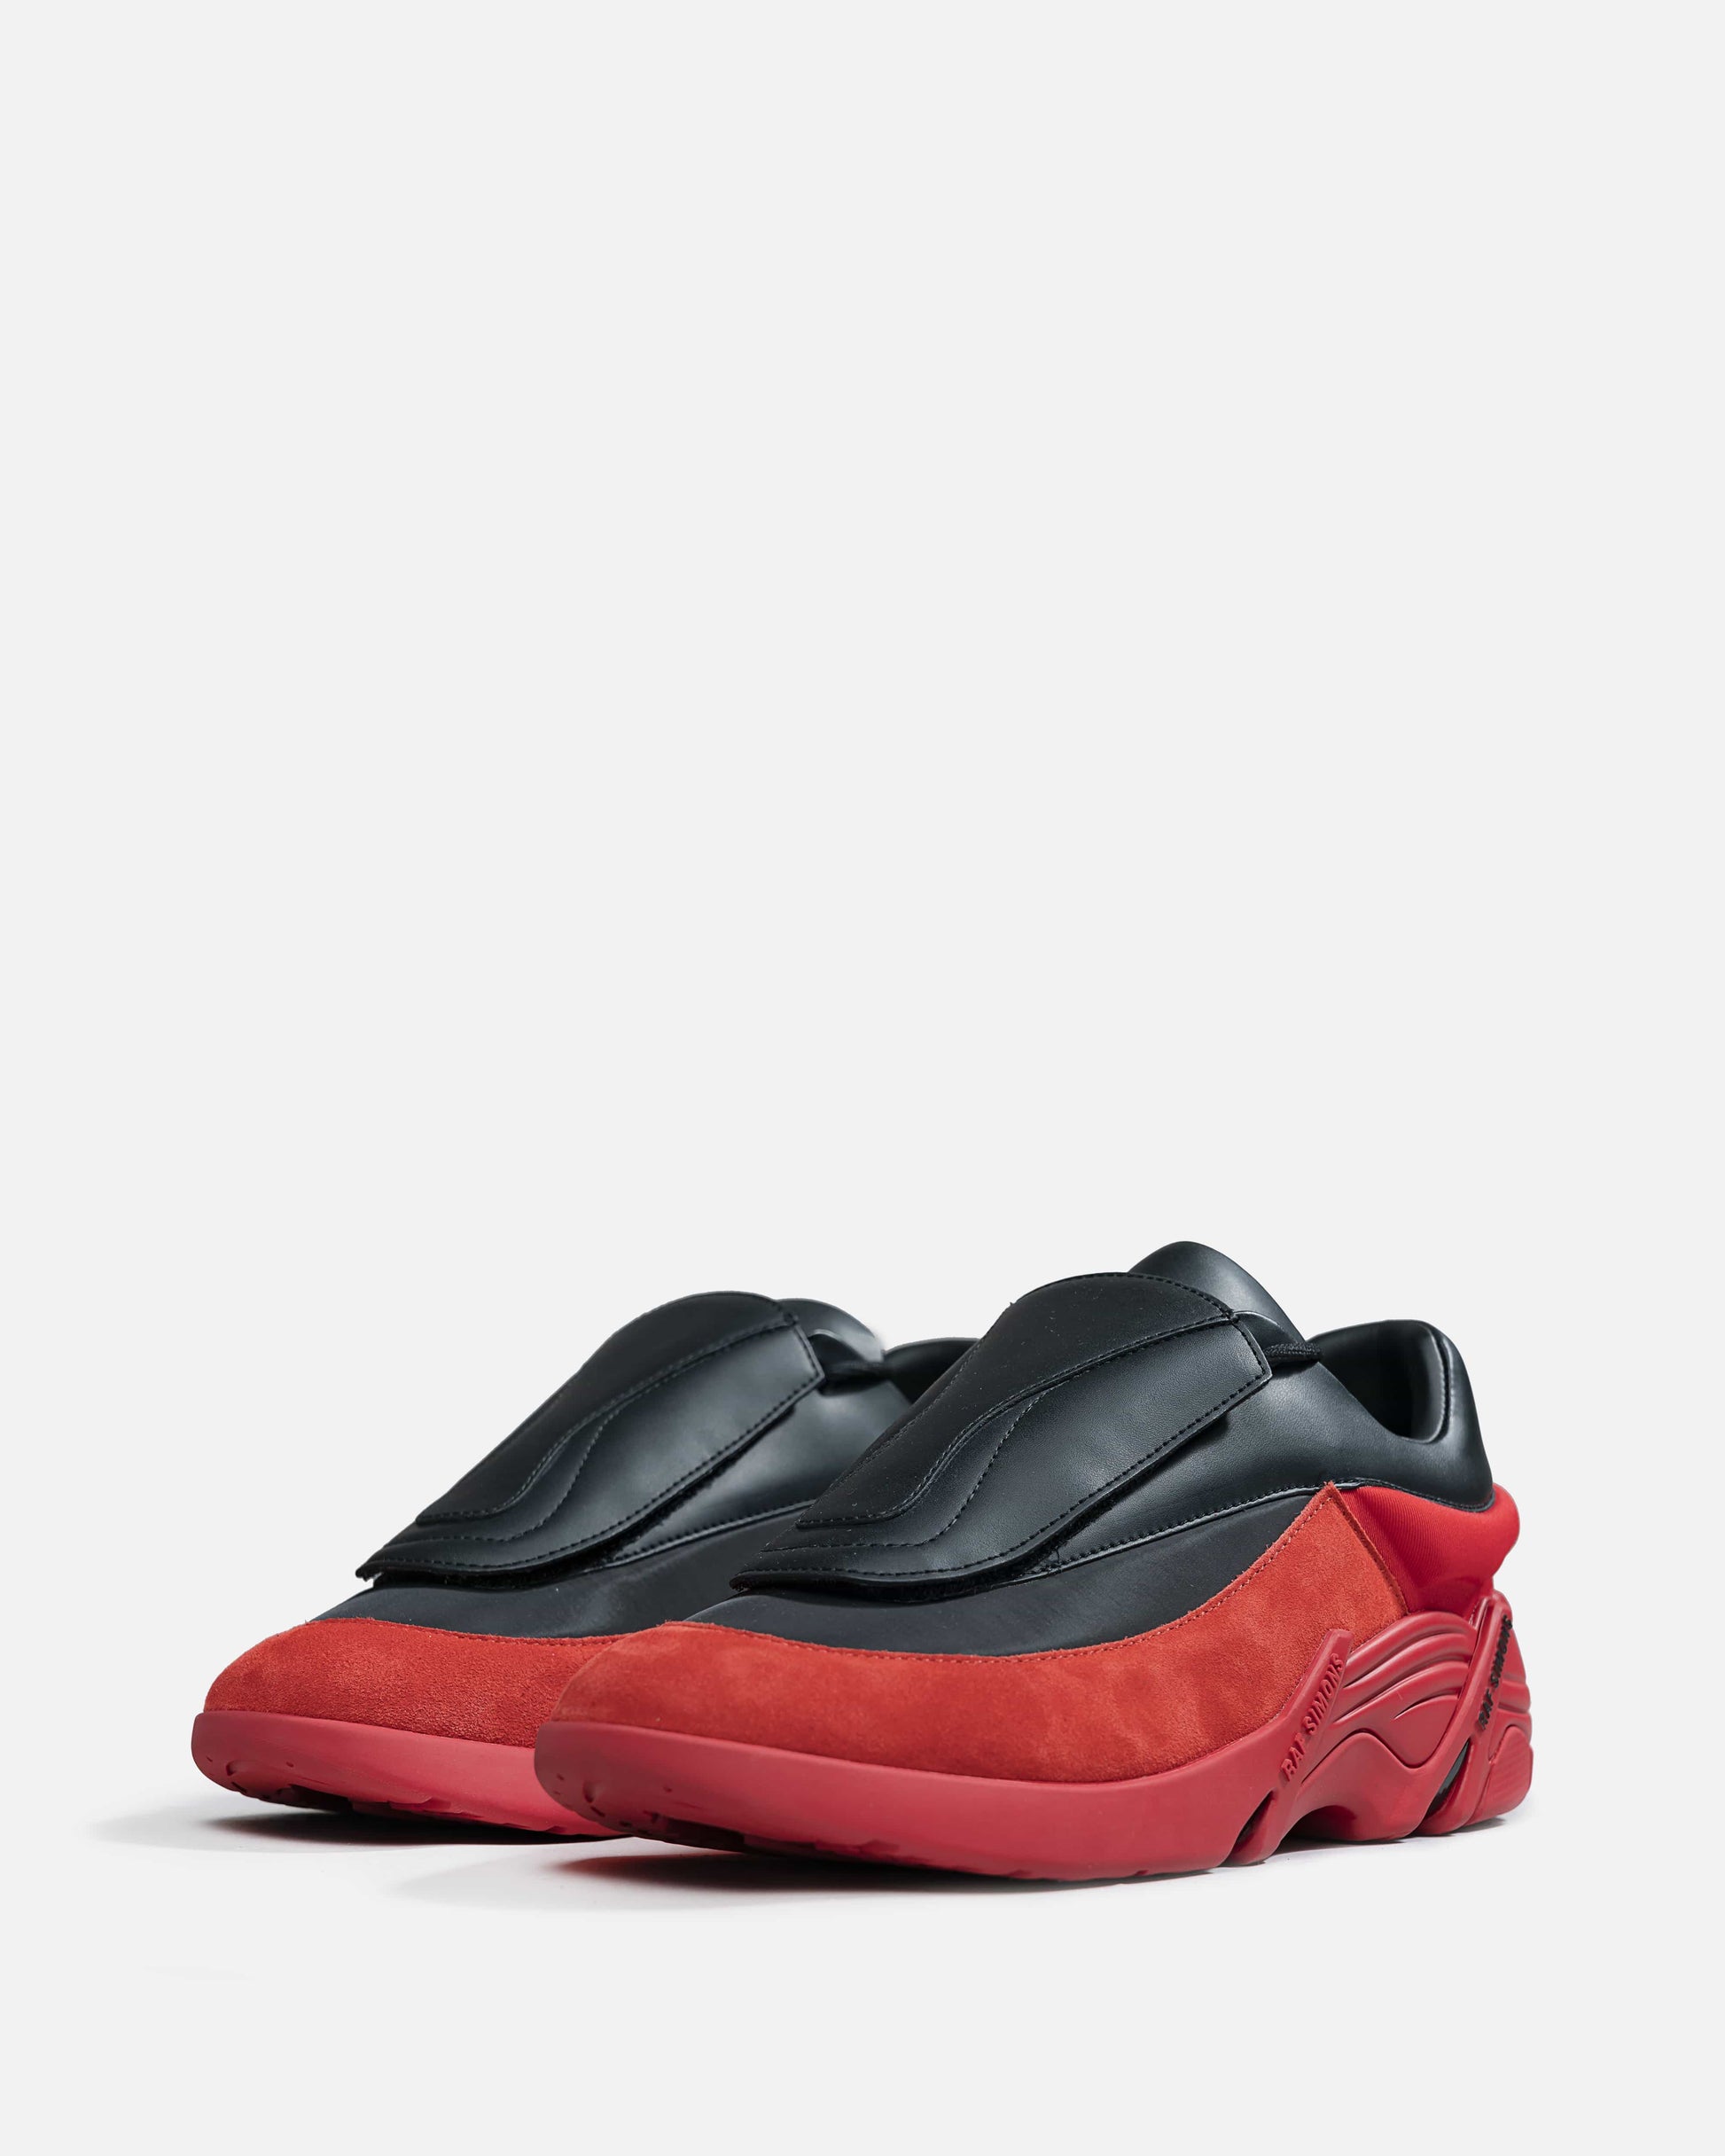 Raf Simons Men's Sneakers Antei in Black & Red